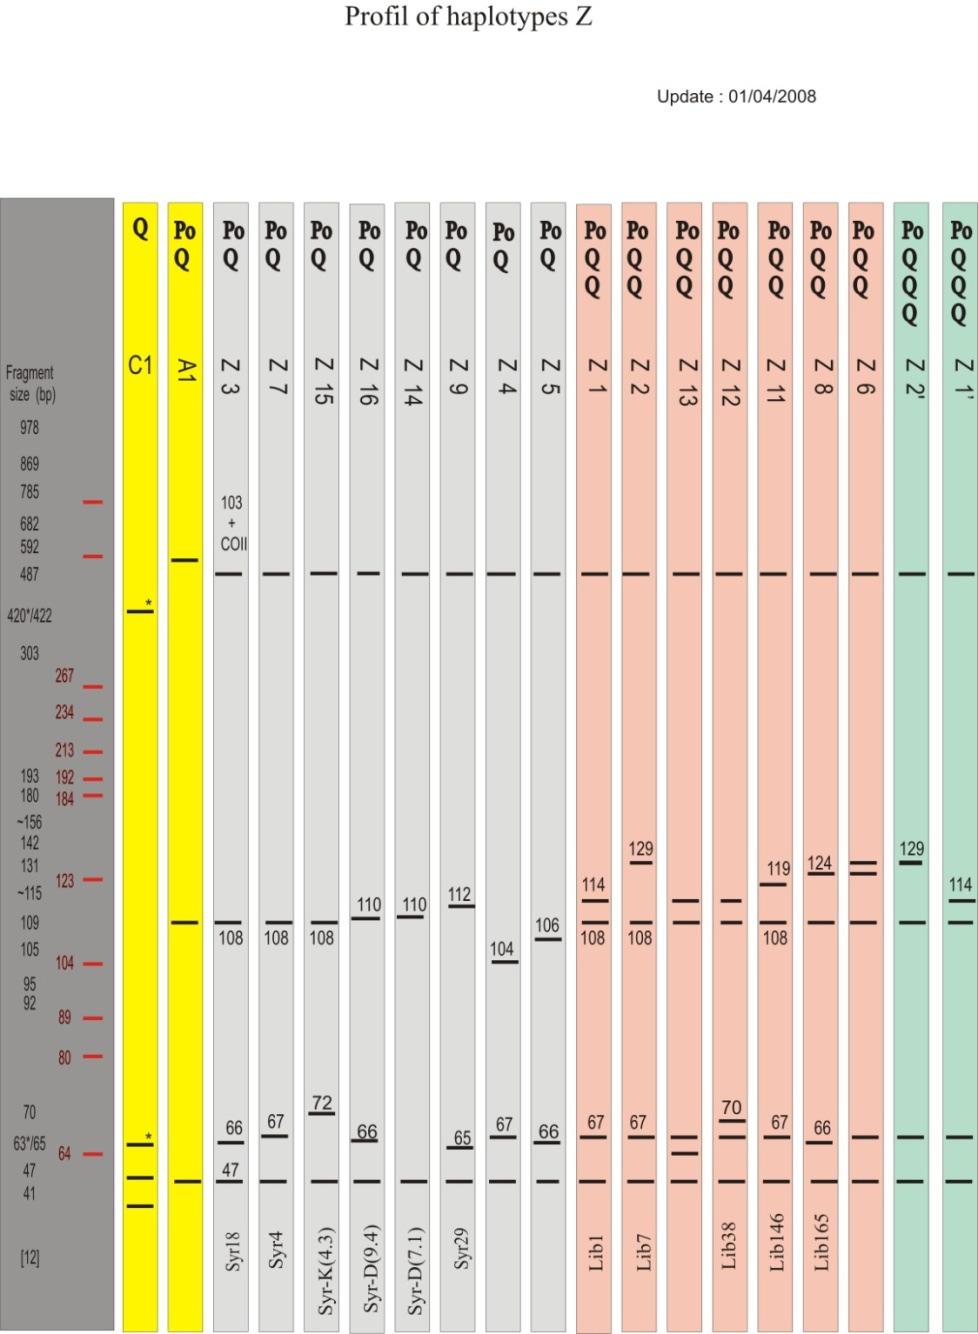 1. Mitochondrial marker: mtdna, COI-COII region. Restriction map/ Profile of the Syrian haplotypes Z Damascus: C1, C2, Z1, Z2, Z3, Z4, Z5, Z7, Z15, Z16, A2, A3.